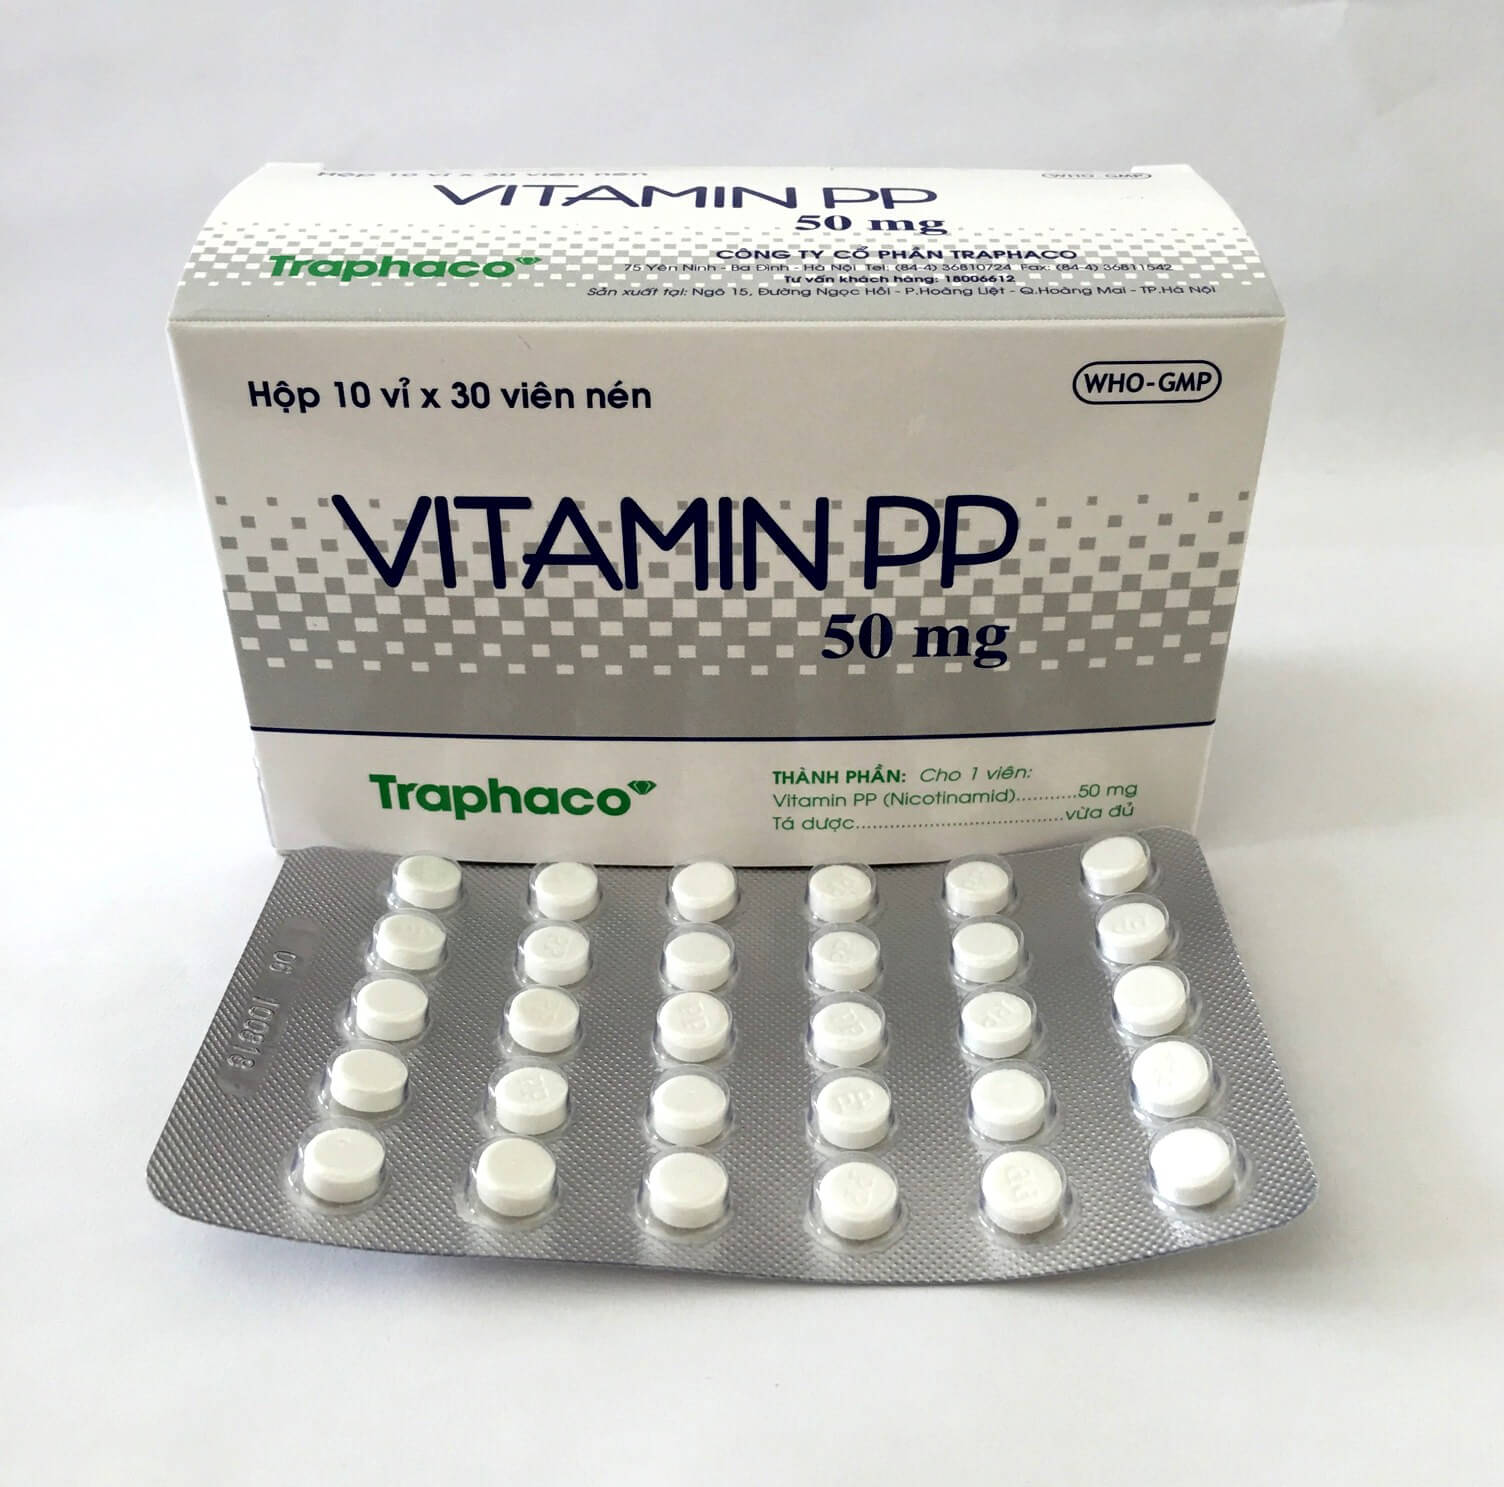 Vitamin Pp Image